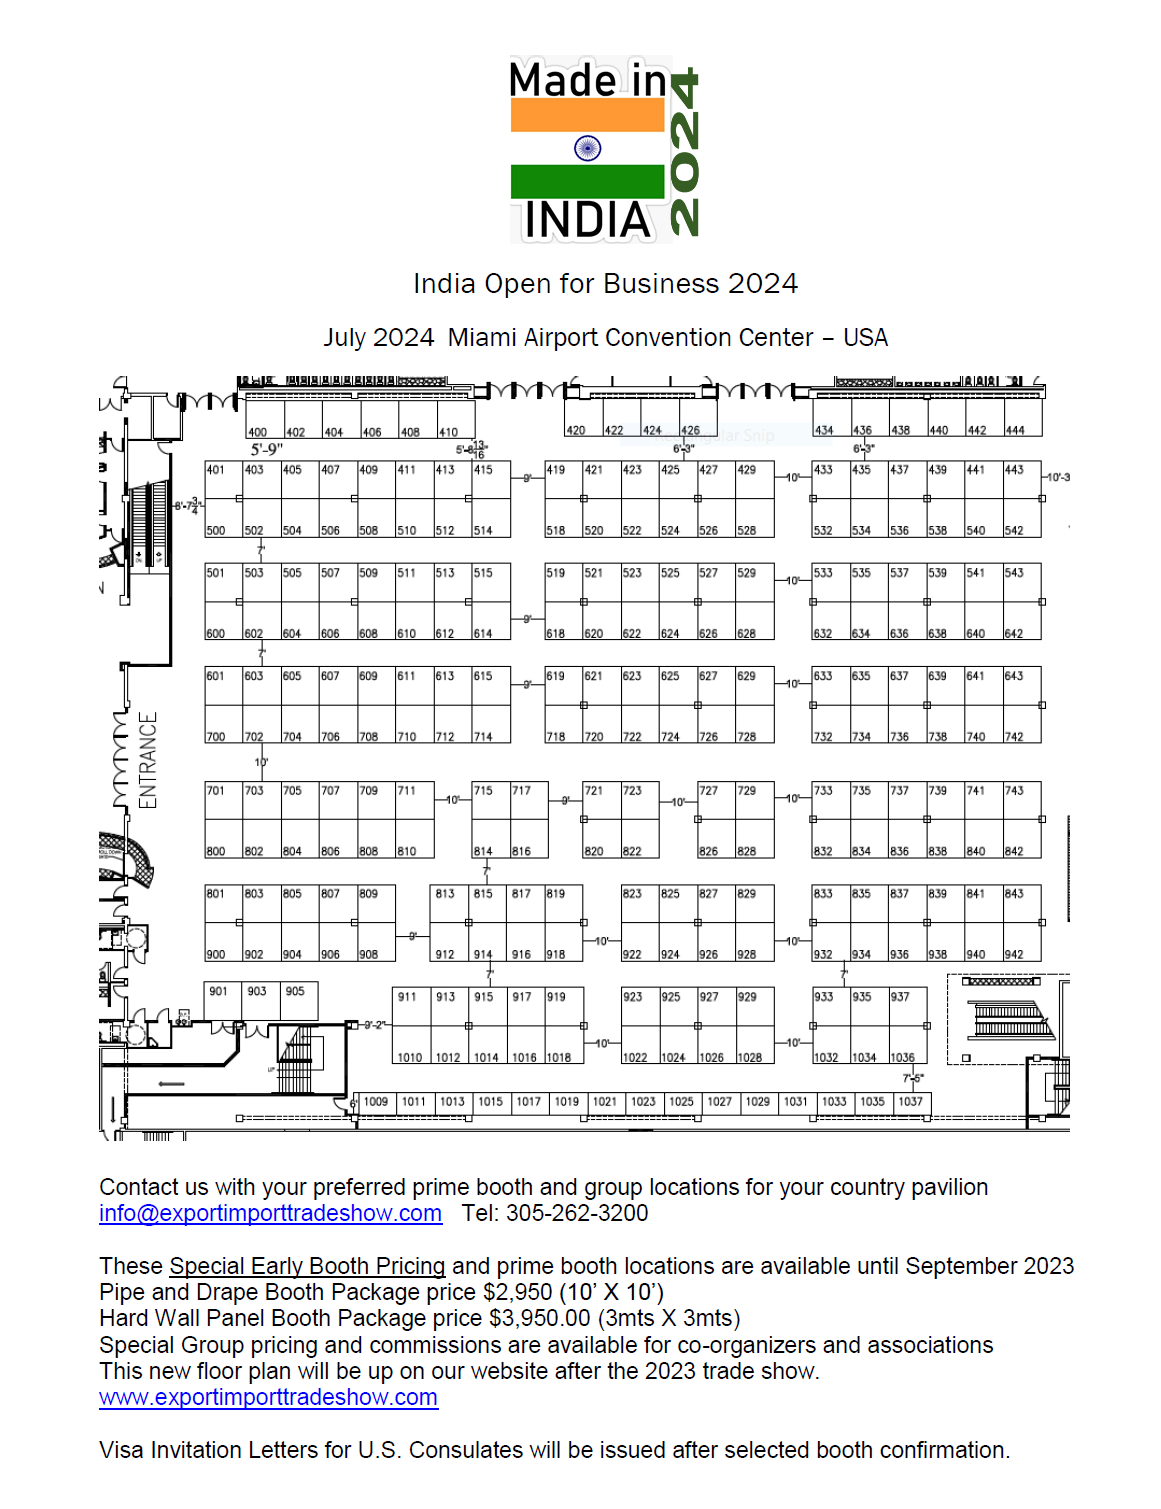 India Business Floor Plan Expo 2024